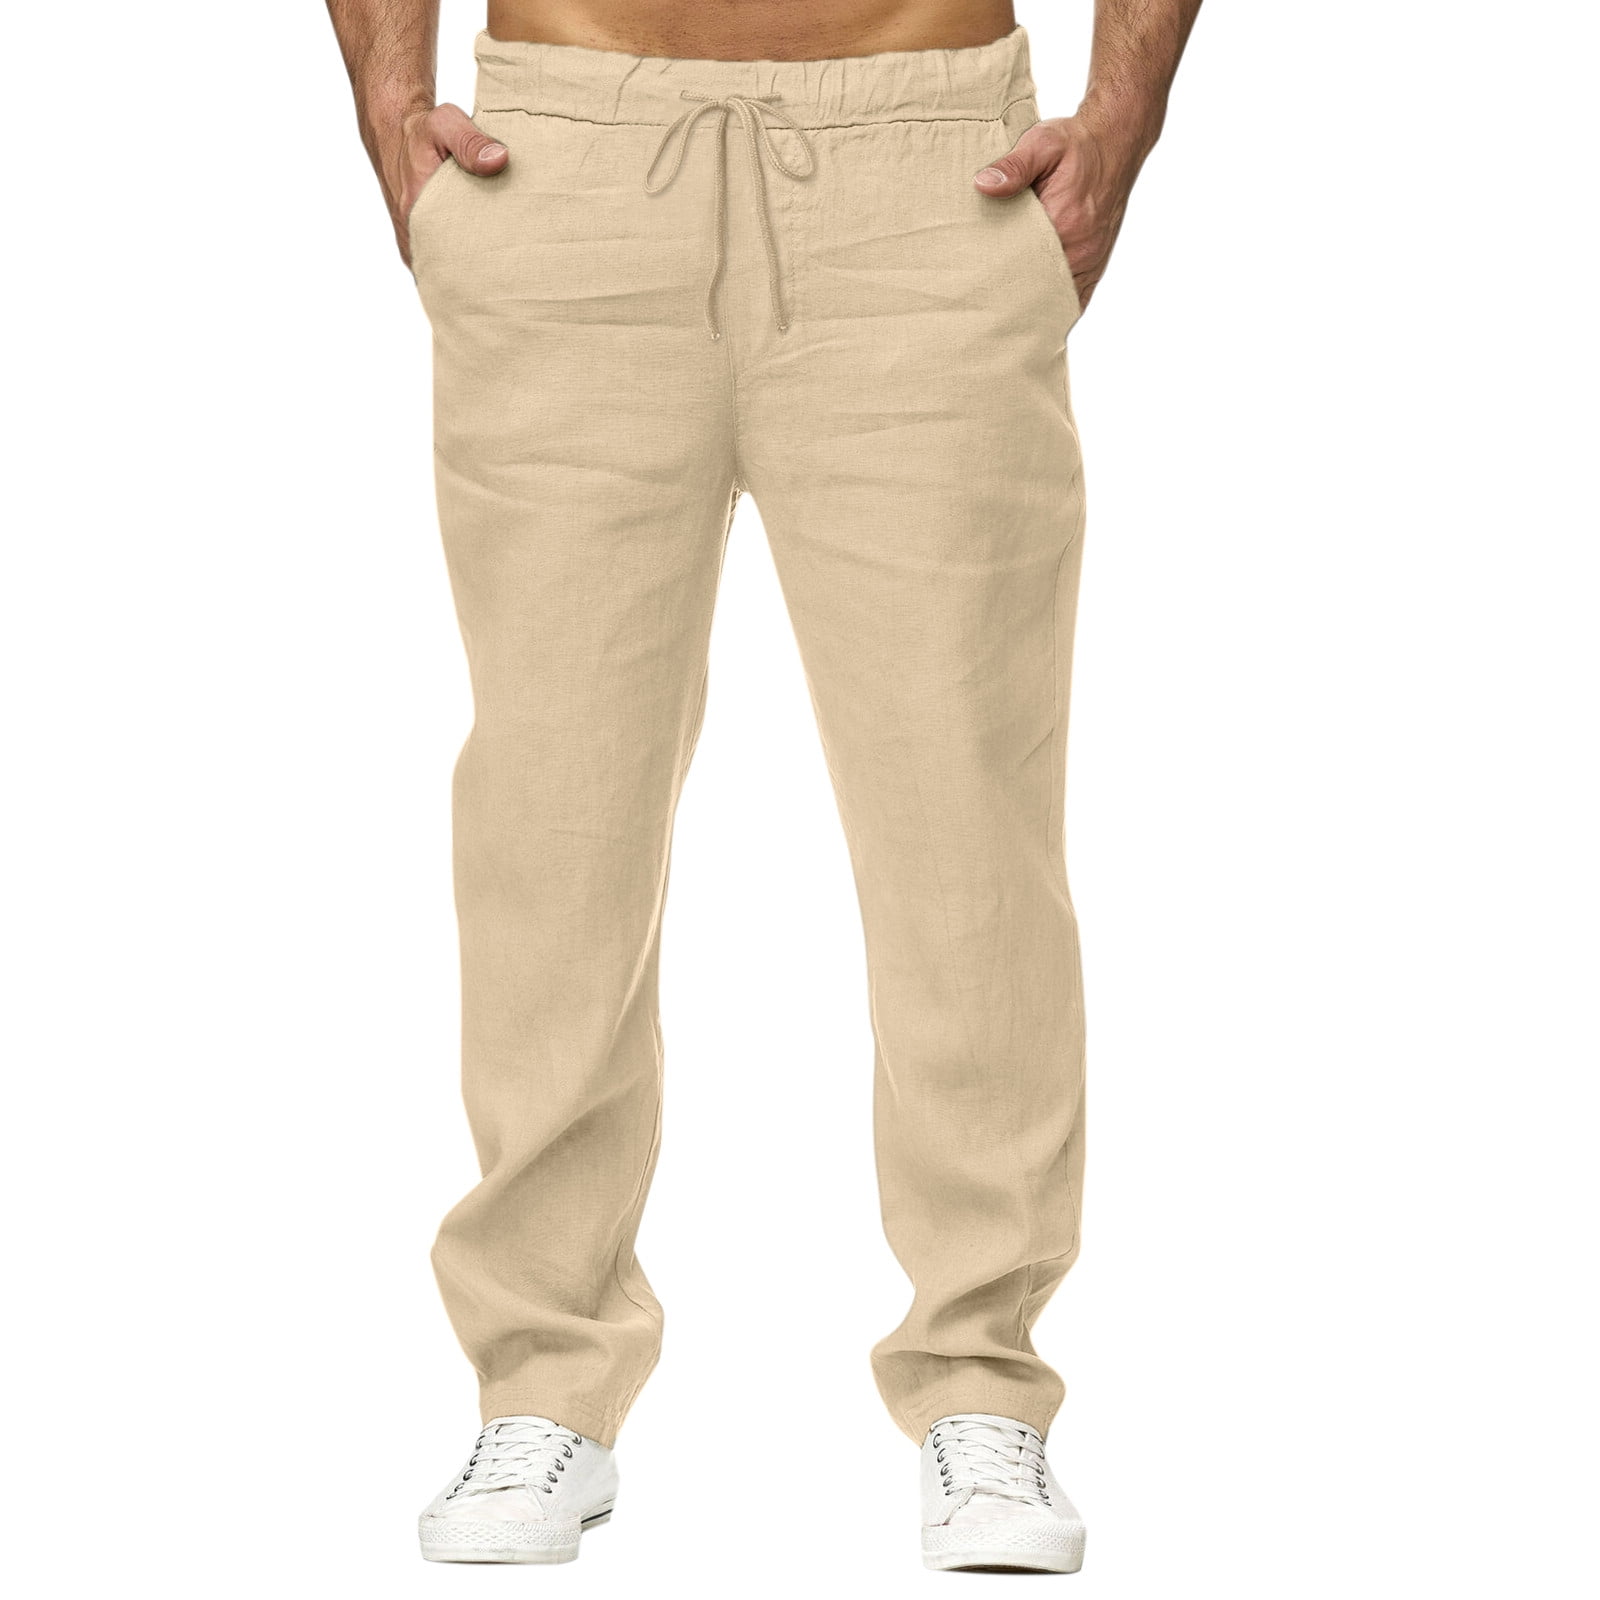 VSSSJ Men's Cotton Linen Pants Slim Fit Music Print Drawstring Elastic  Waist Straight Trousers with Pocket Casual Stretchy Breathable Long Pants  Khaki M 